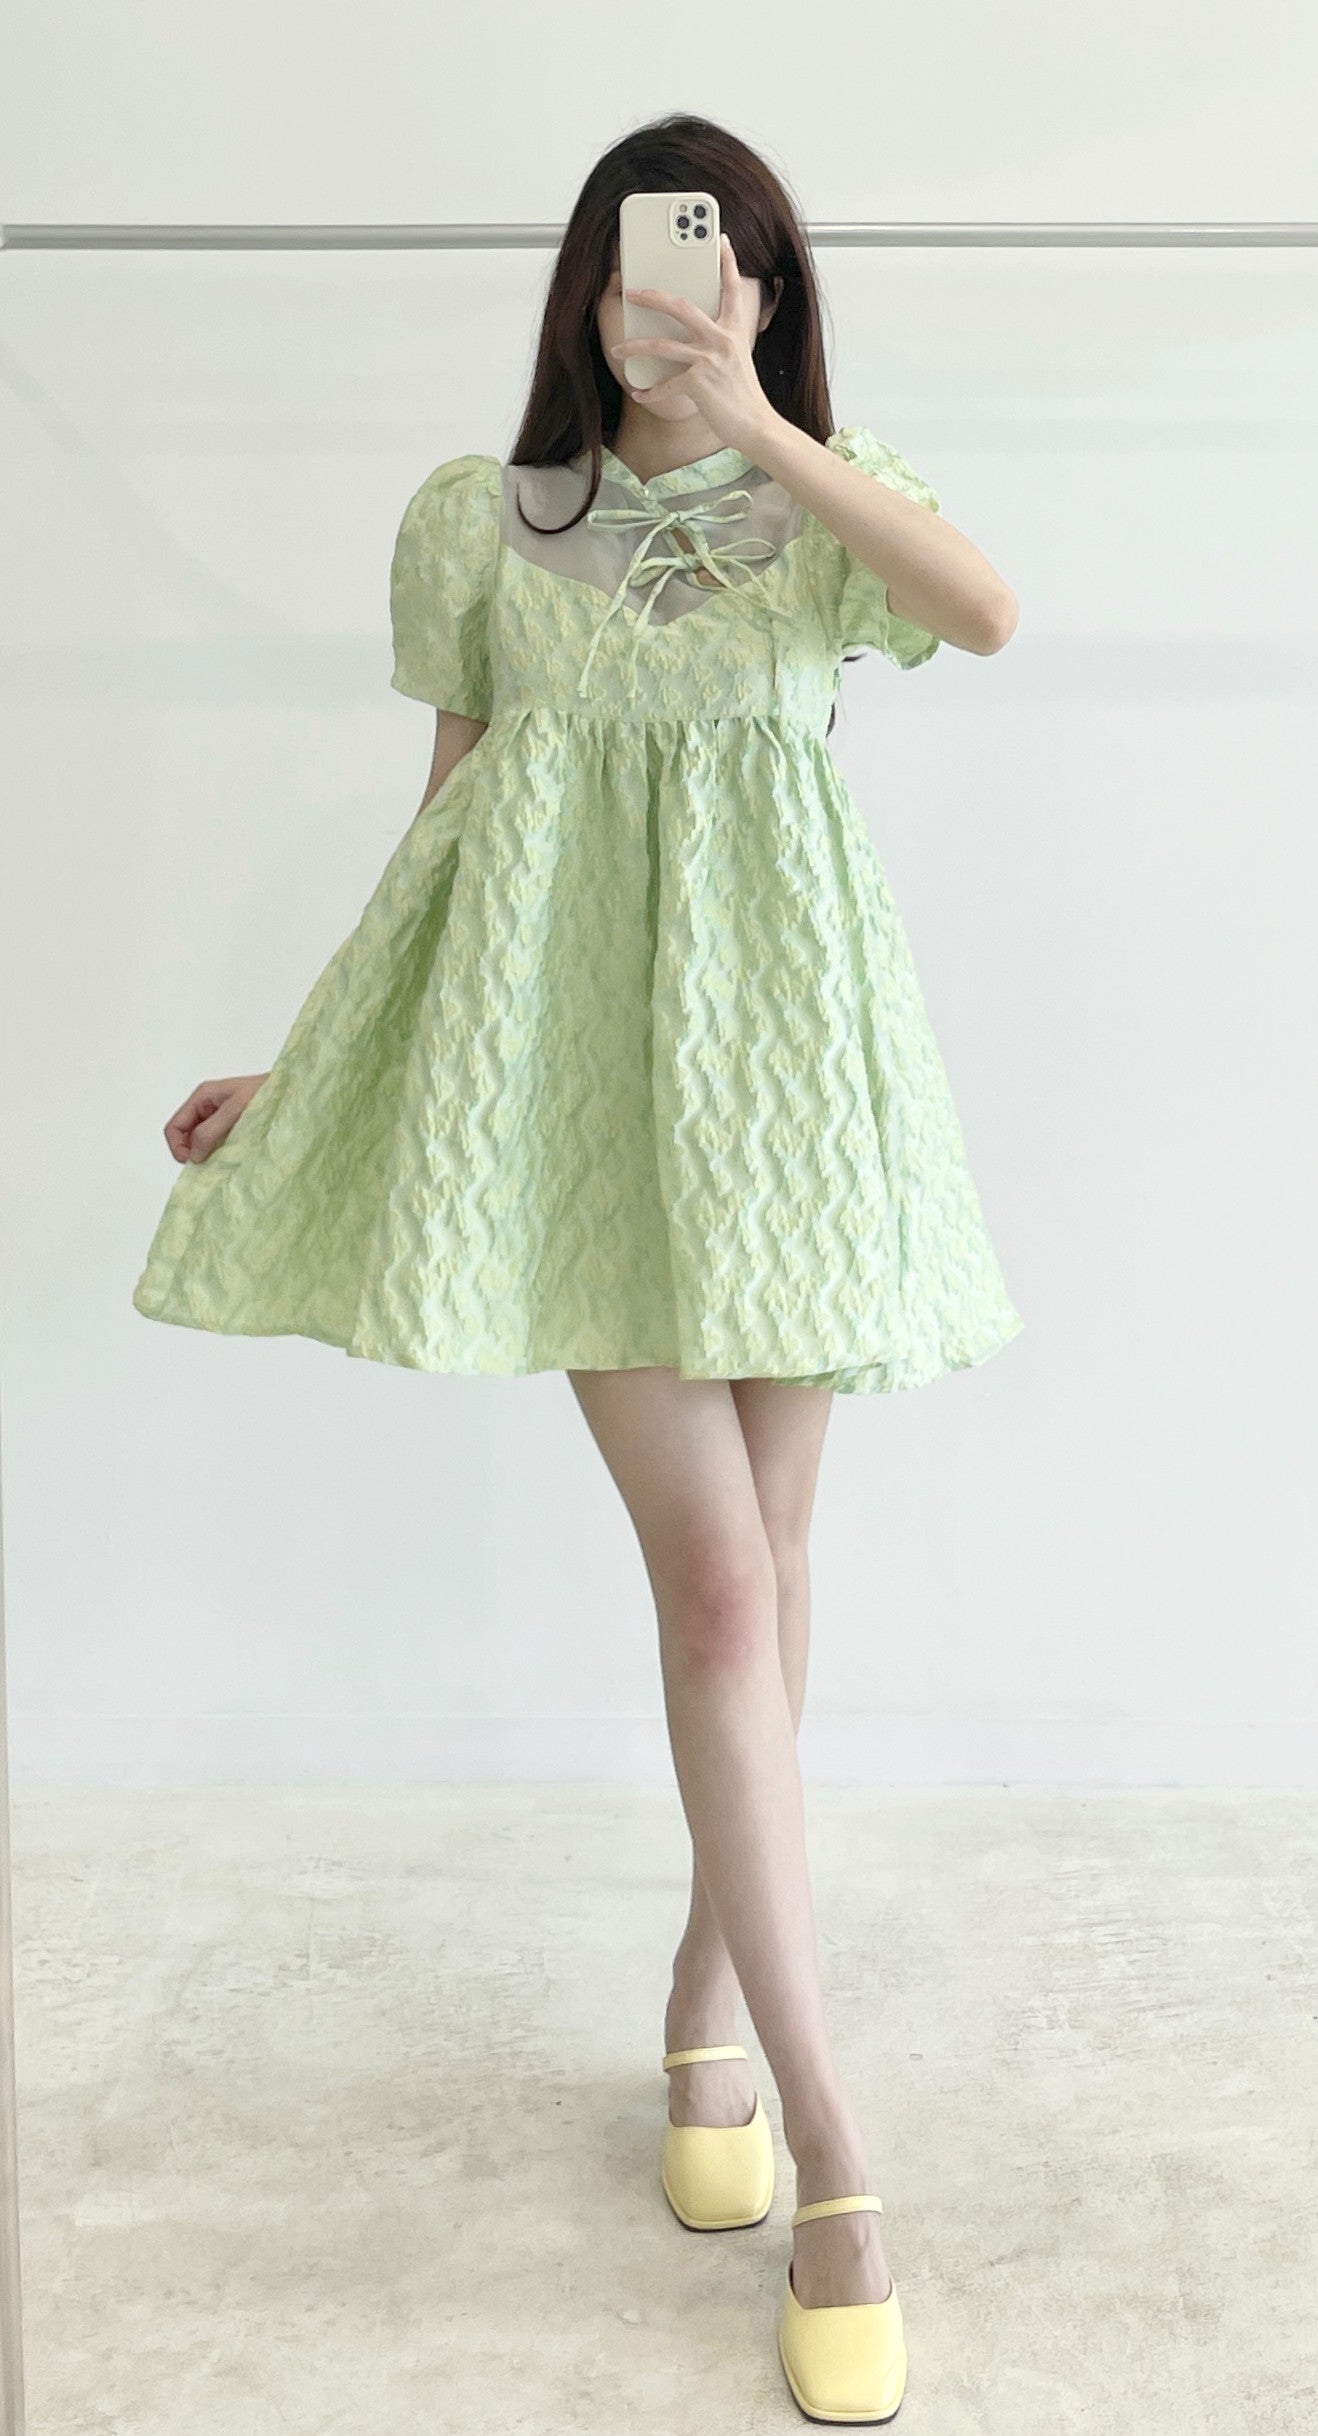 Qipao-inspired short-sleeve dress